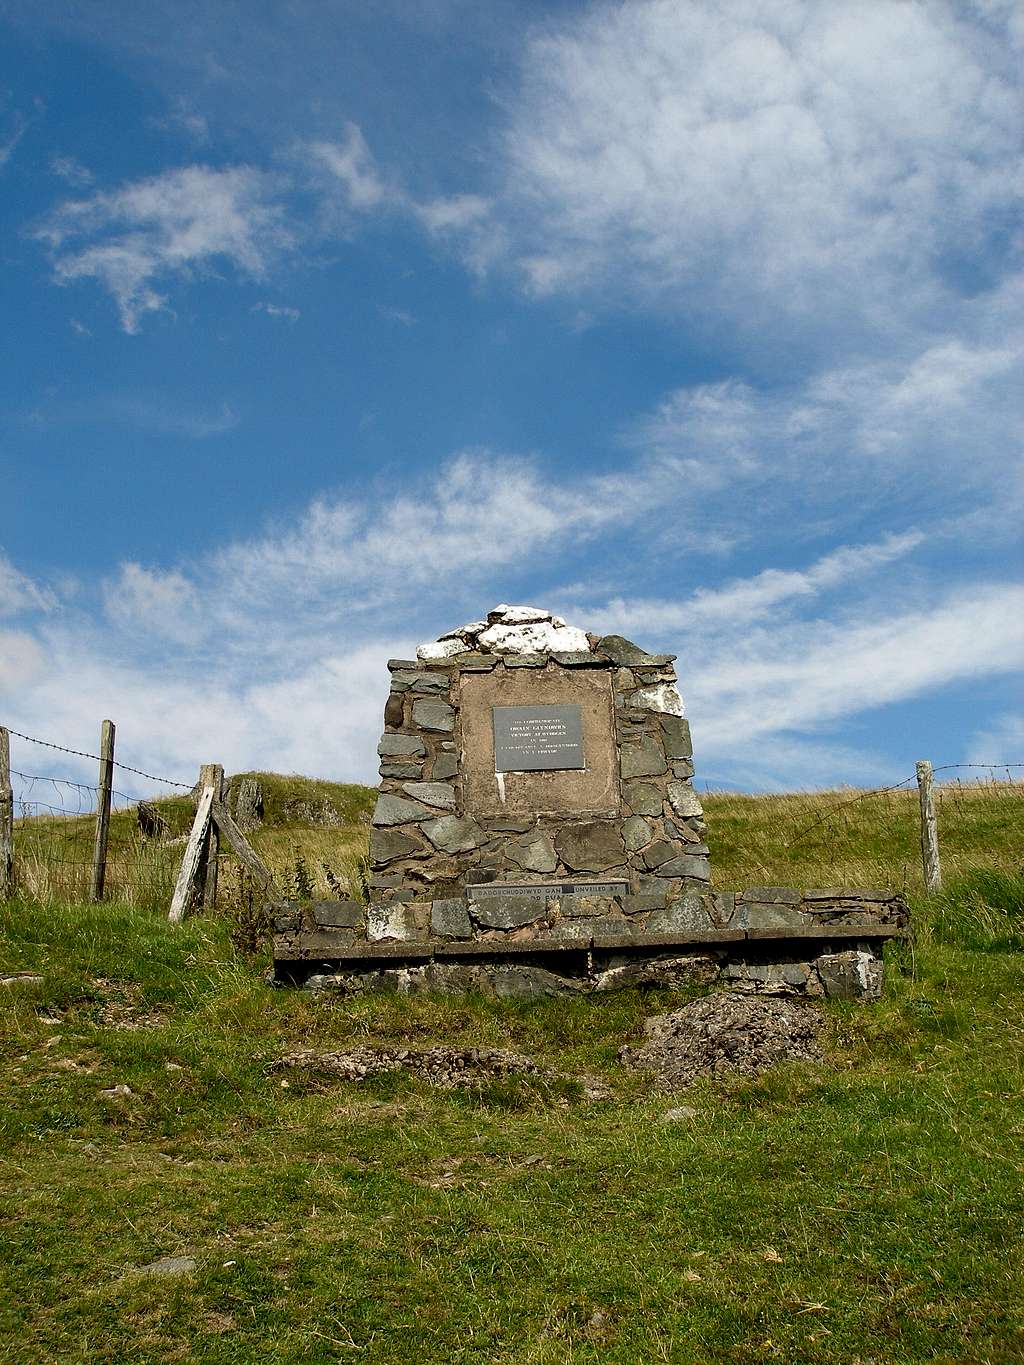 The monument commemorating the Battle of Mynydd Hyddgen